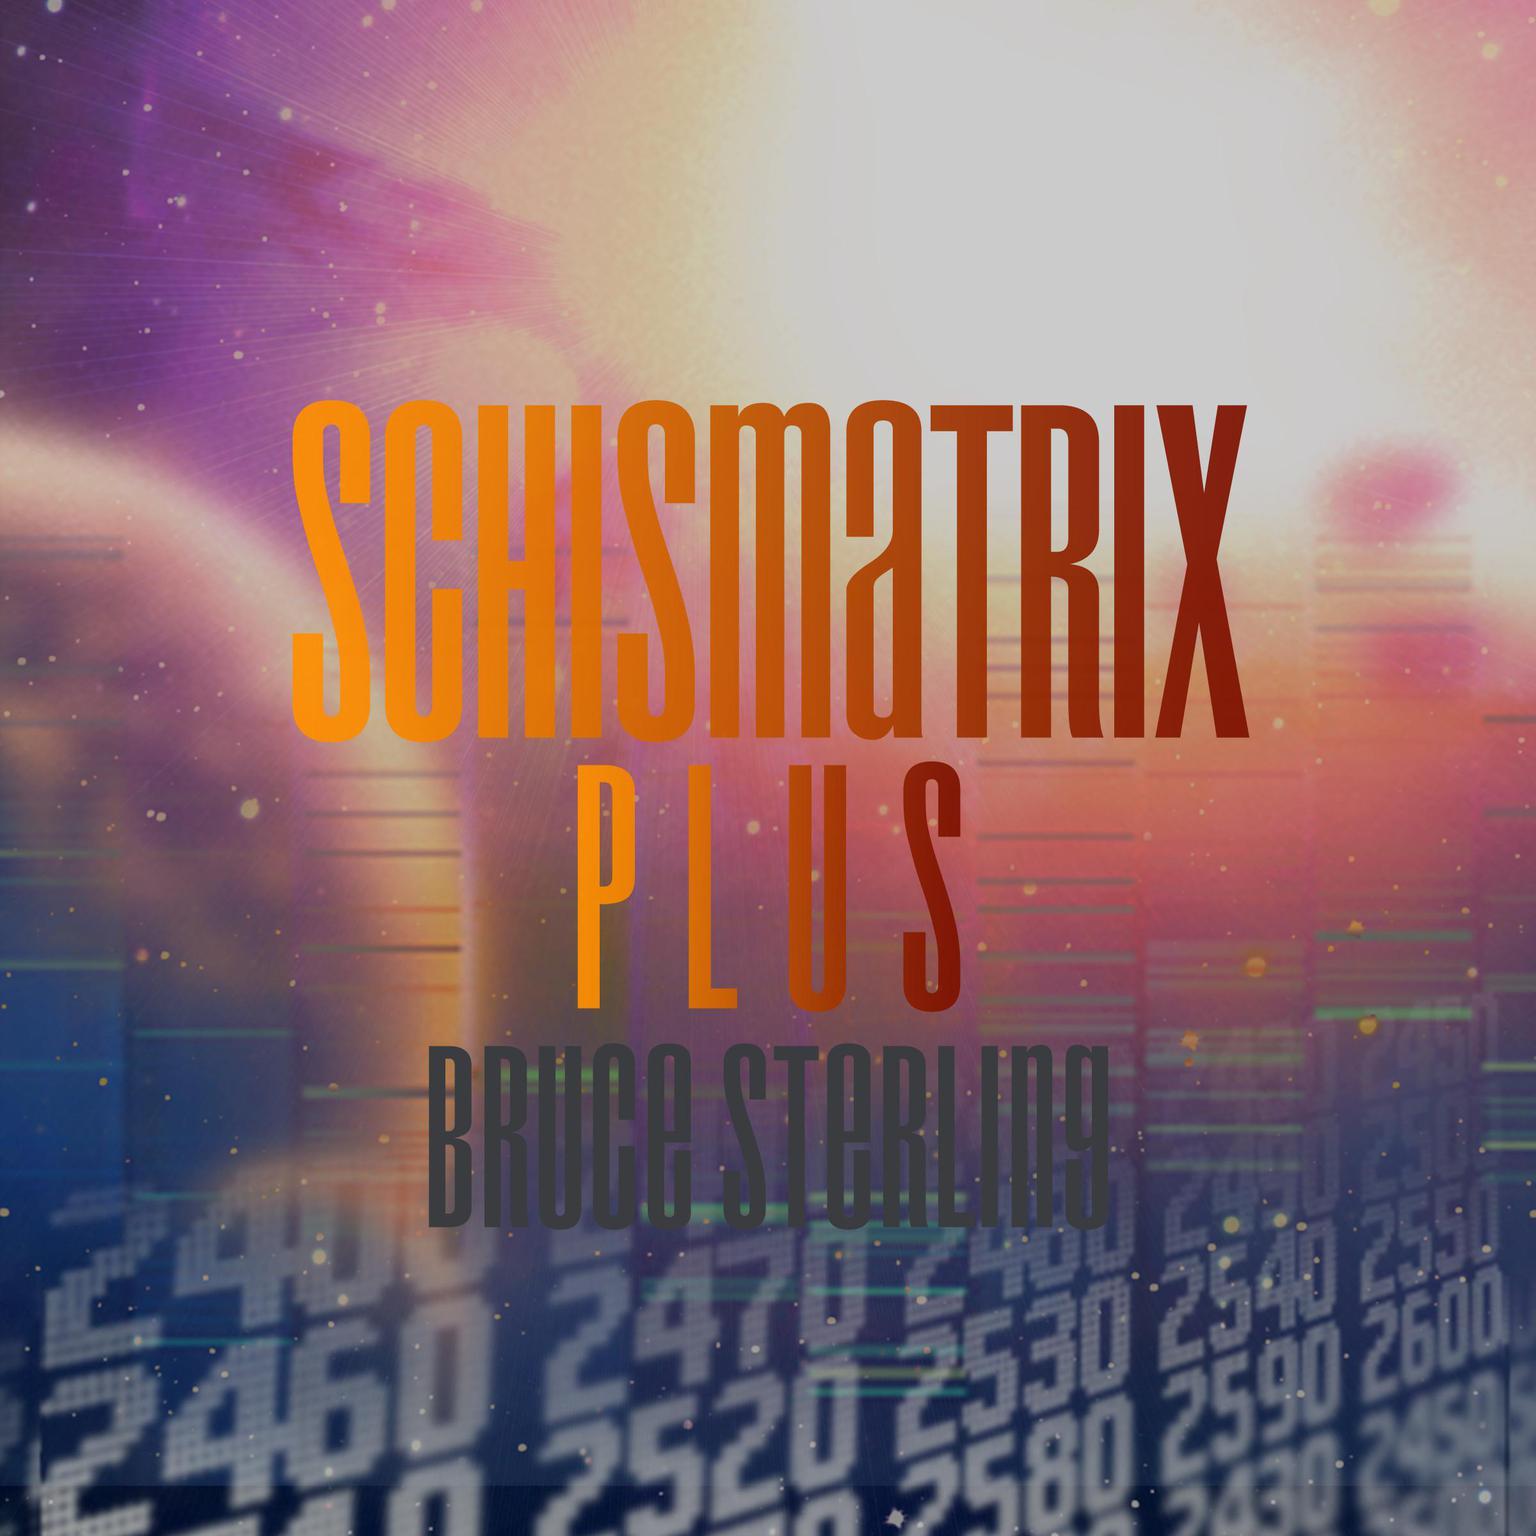 Schismatrix Plus Audiobook, by Bruce Sterling